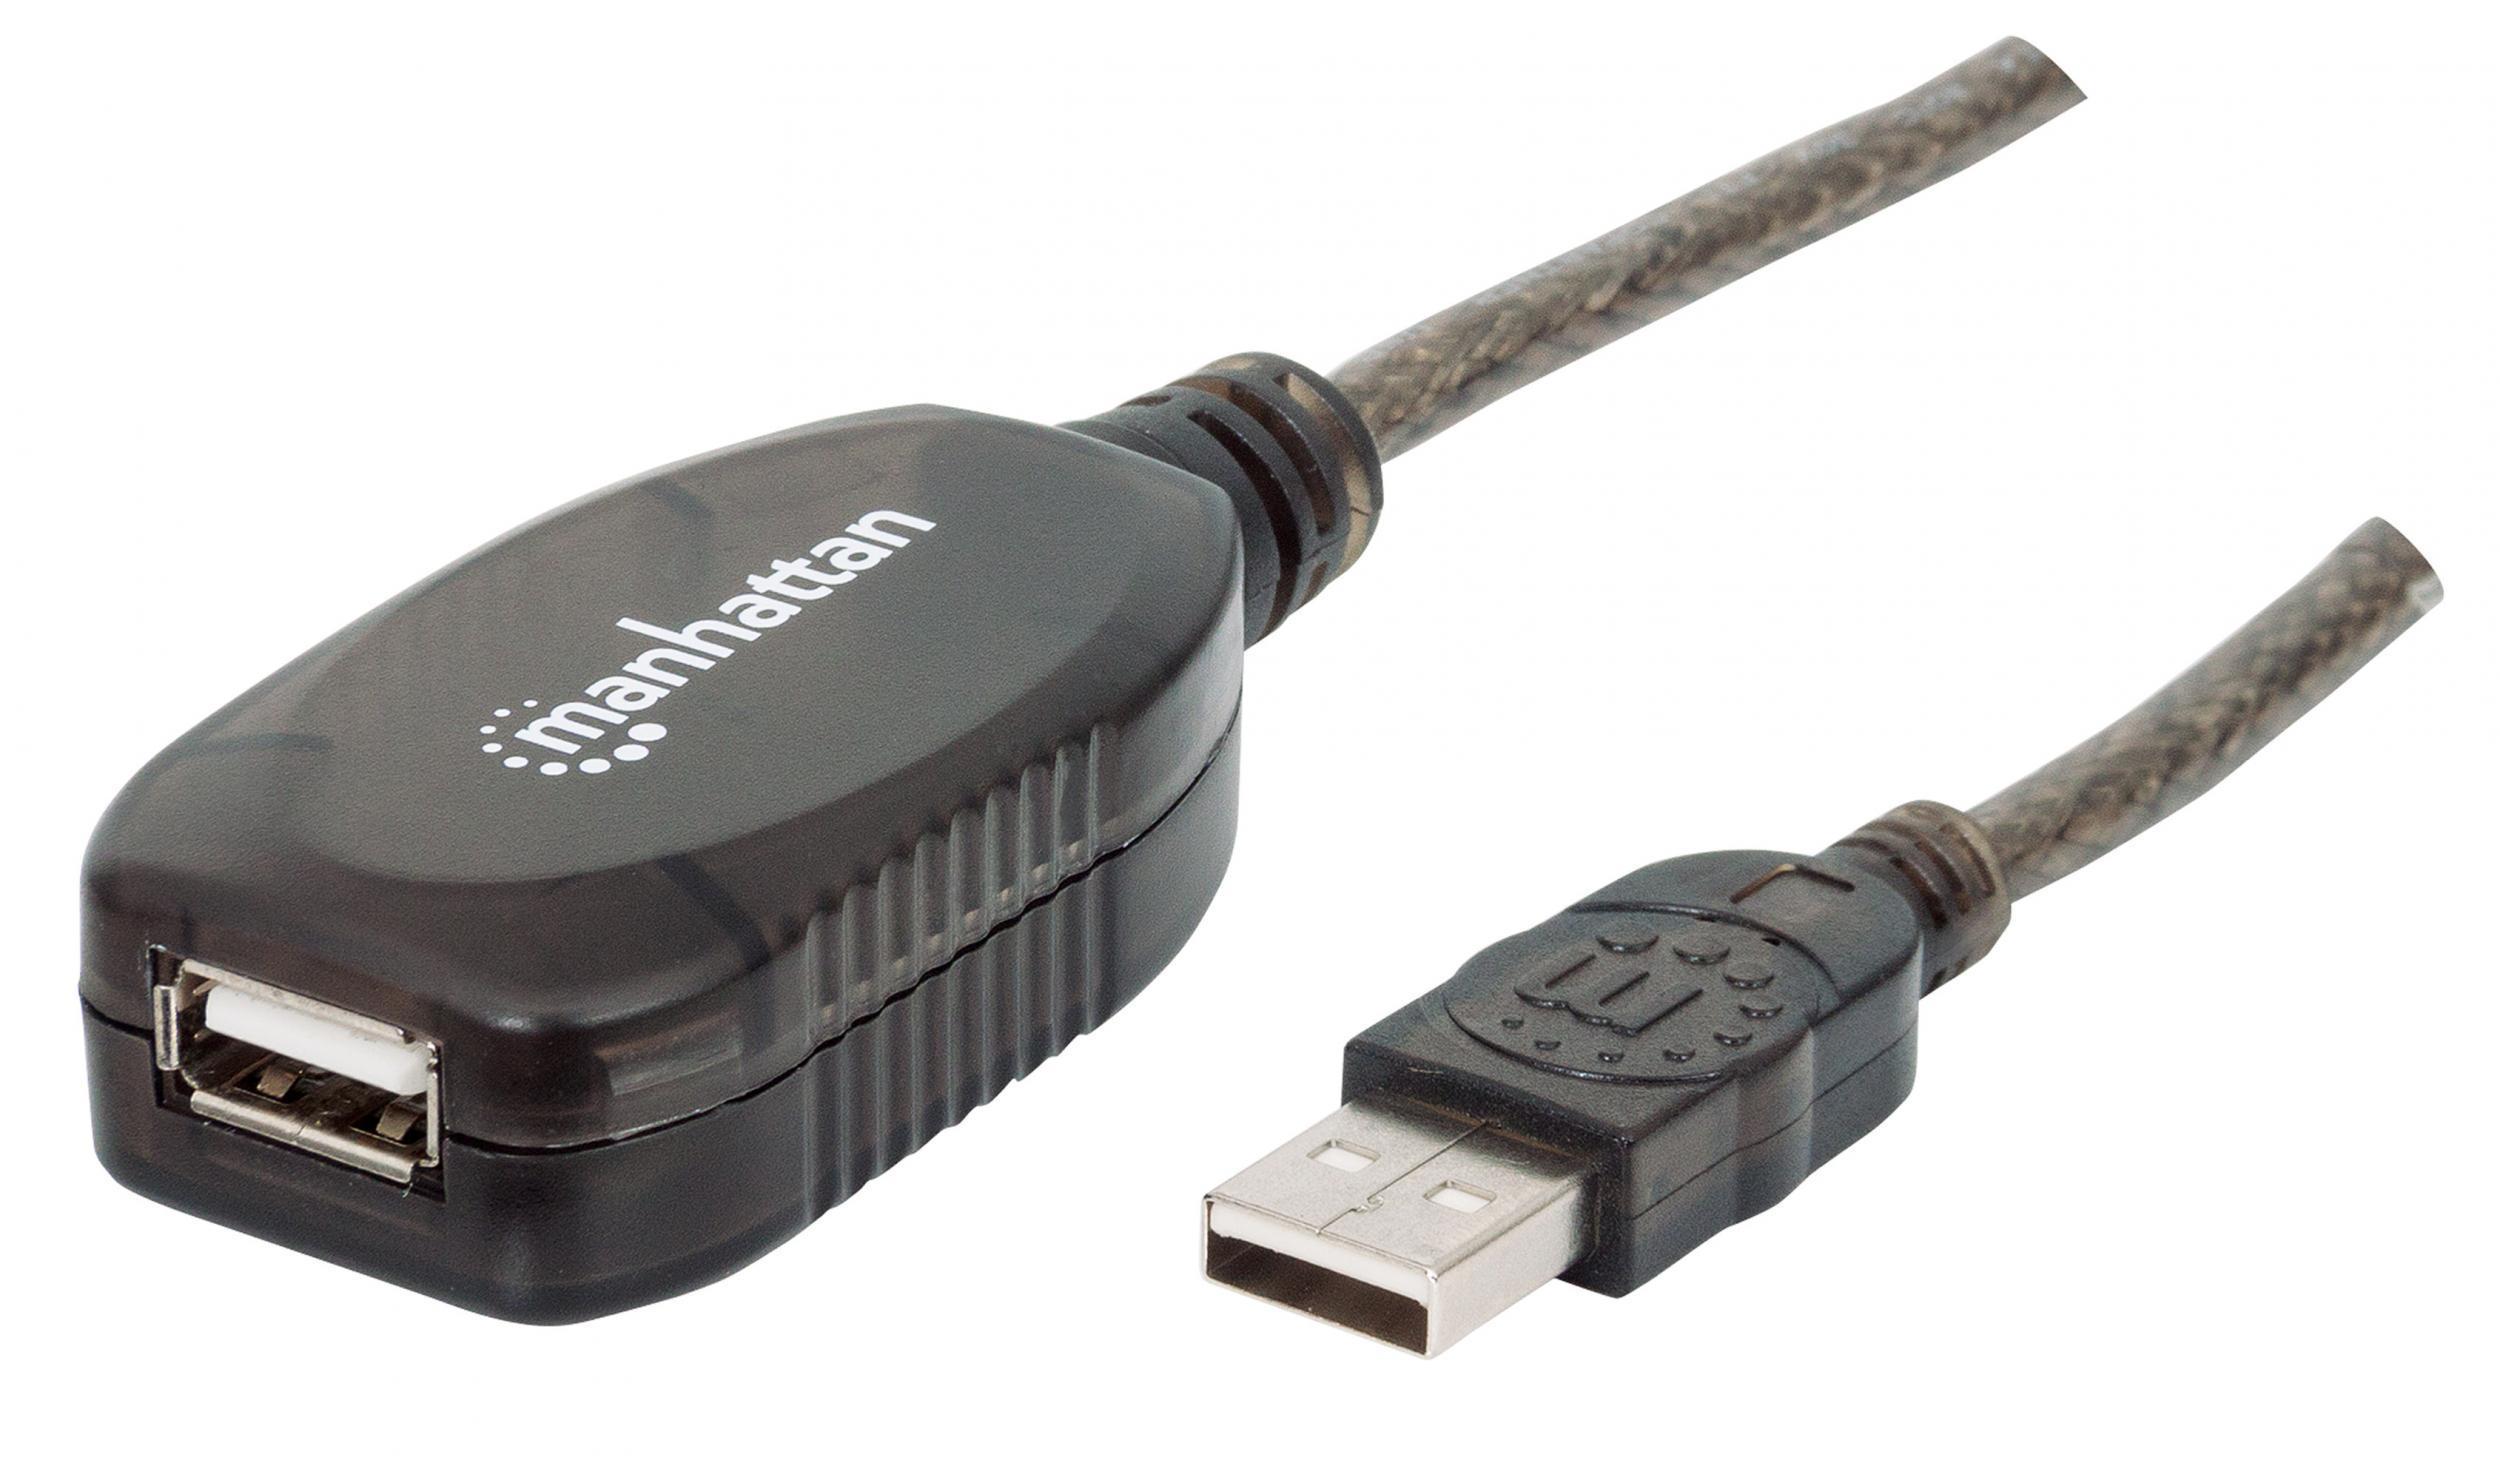 ca. 0.30 m 30 cm 1 FT USB 2.0 Tipo A/A maschio a maschio Cavo di Prolunga per Cavo Blu FP 